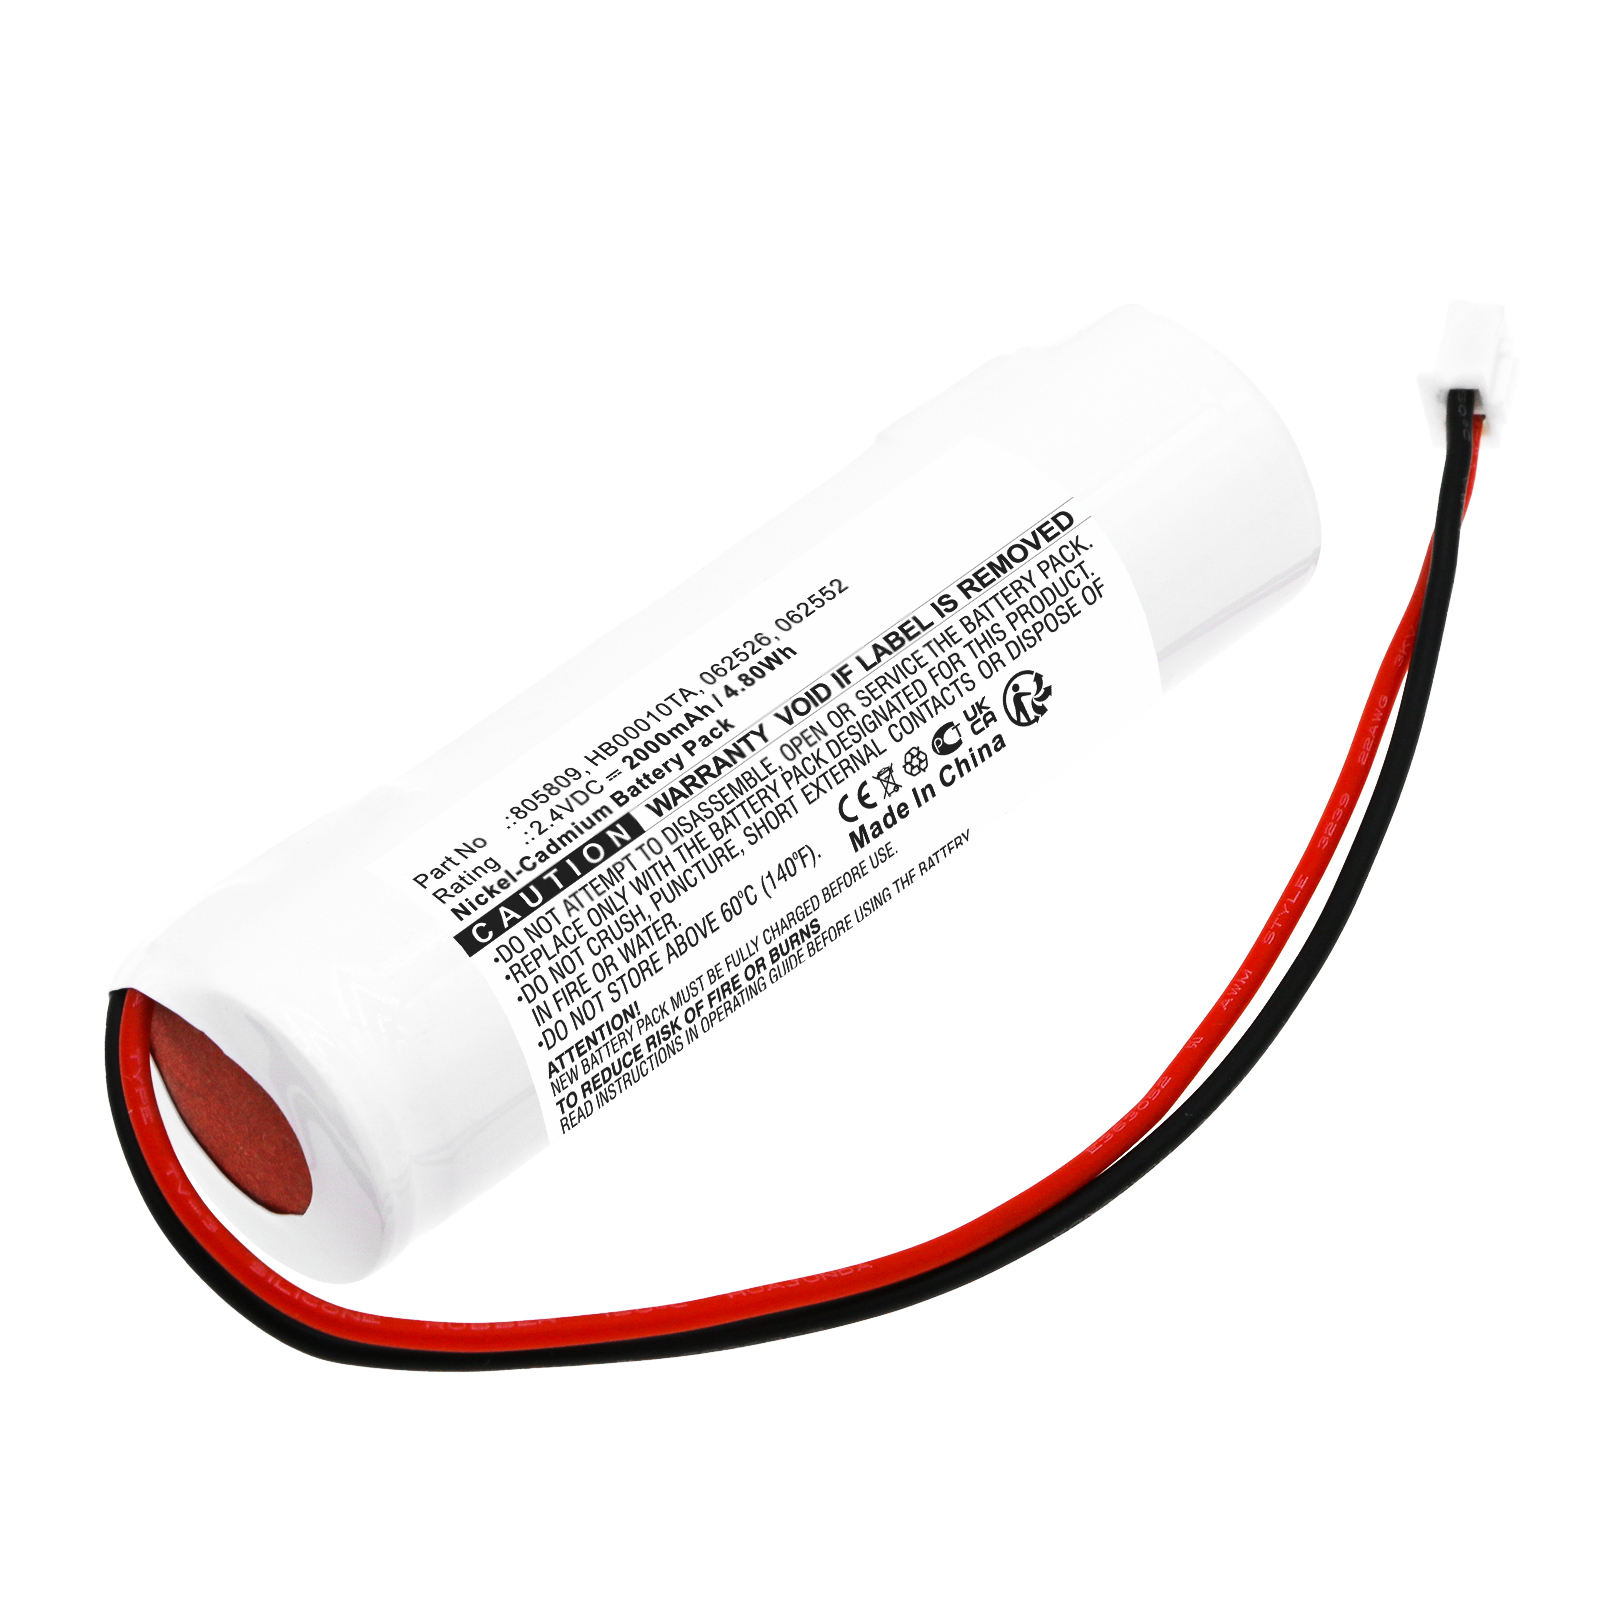 Synergy Digital Emergency Lighting Battery Compatible with Legrand HB00010TA Emergency Lighting Battery (Ni-CD, 2.4V, 2000mAh)